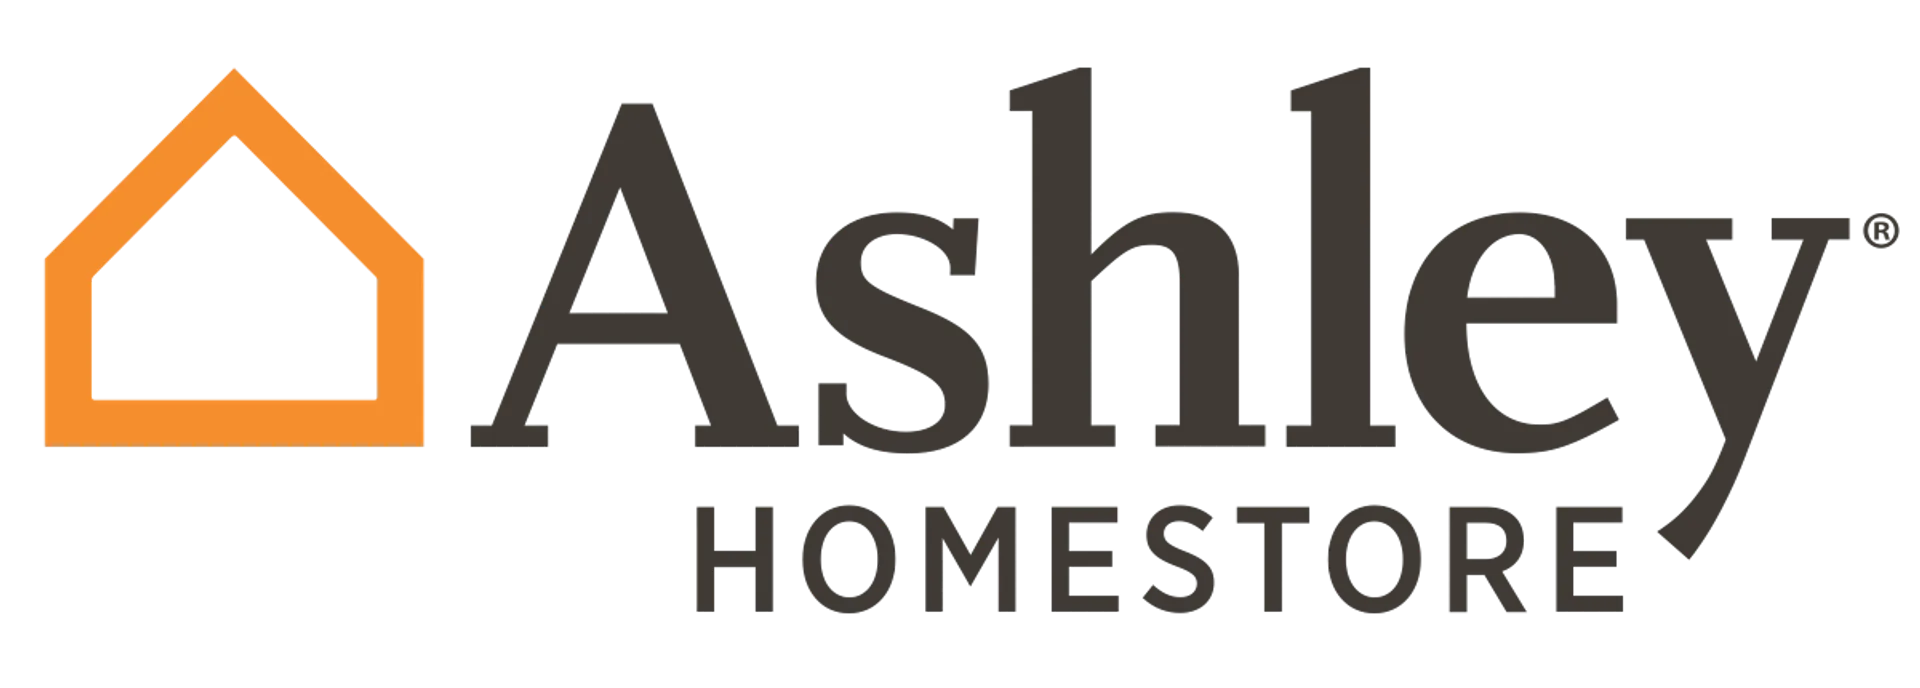 ASHLEY HOMESTORE logo current weekly ad